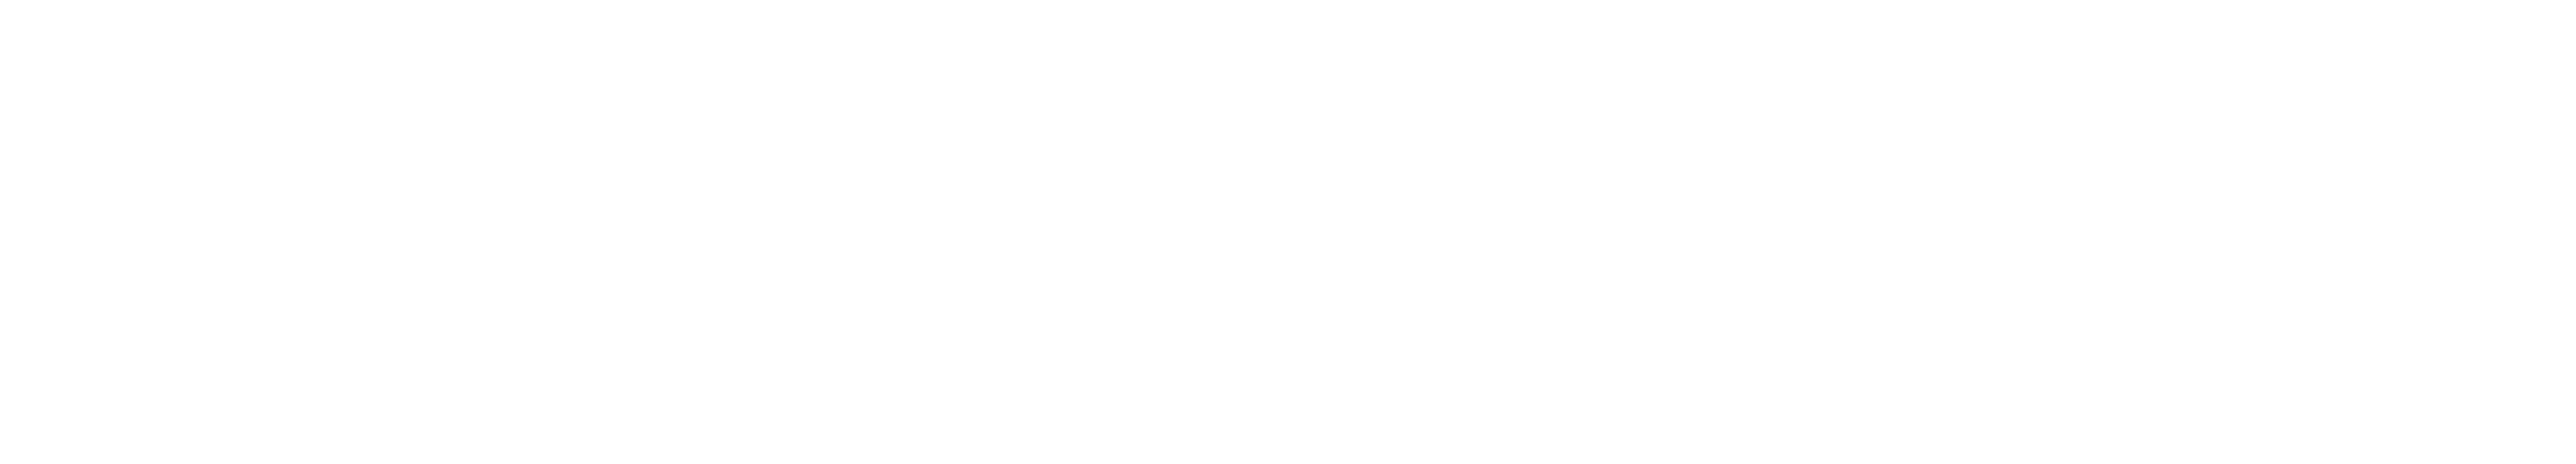 Phil Thompson & Associates